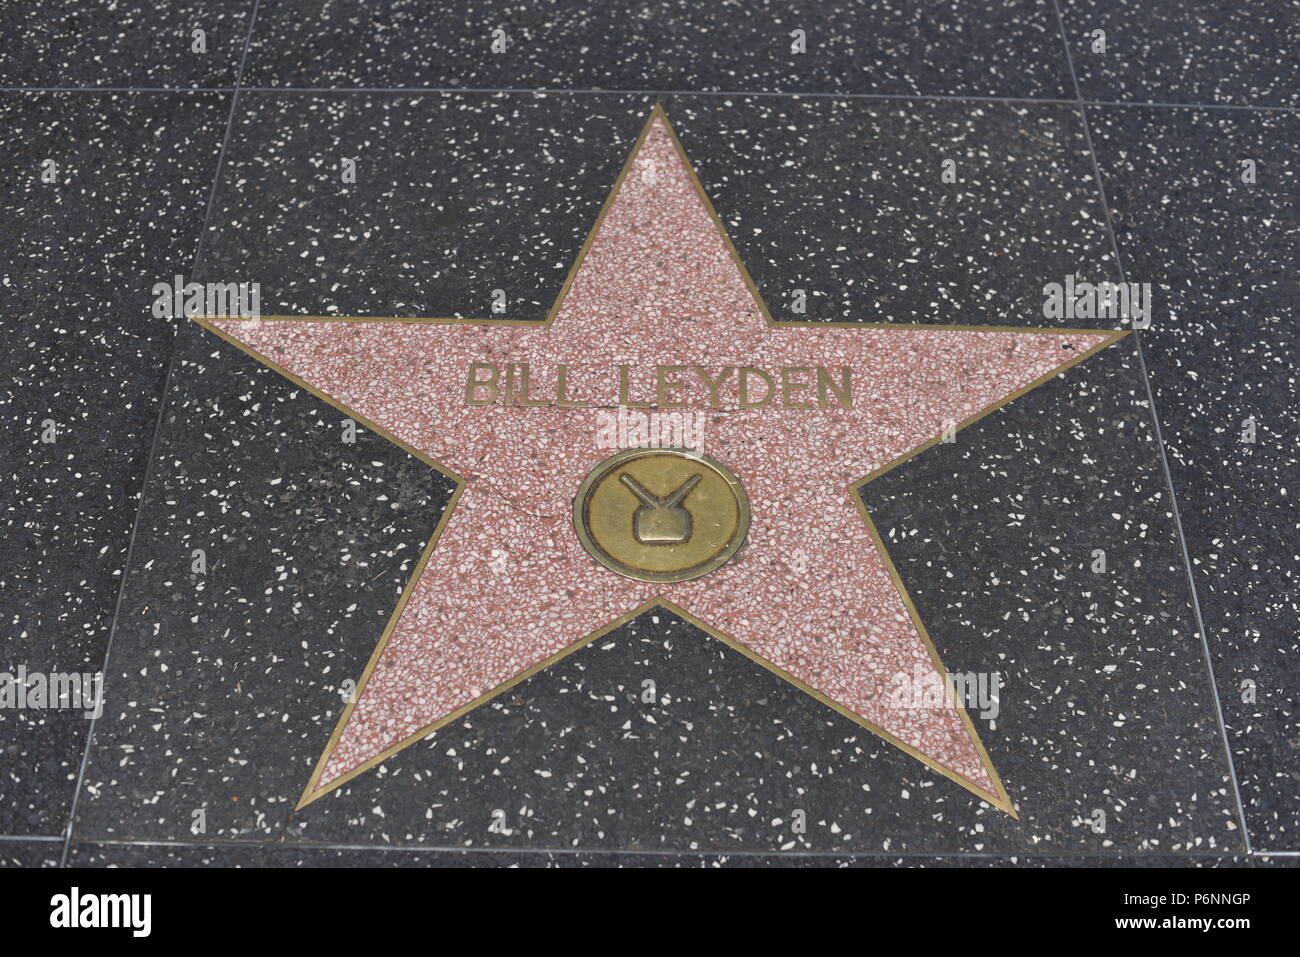 HOLLYWOOD, CA - 29 Giugno: Bill Leyden stella sulla Hollywood Walk of Fame in Hollywood, la California il 29 giugno 2018. Foto Stock